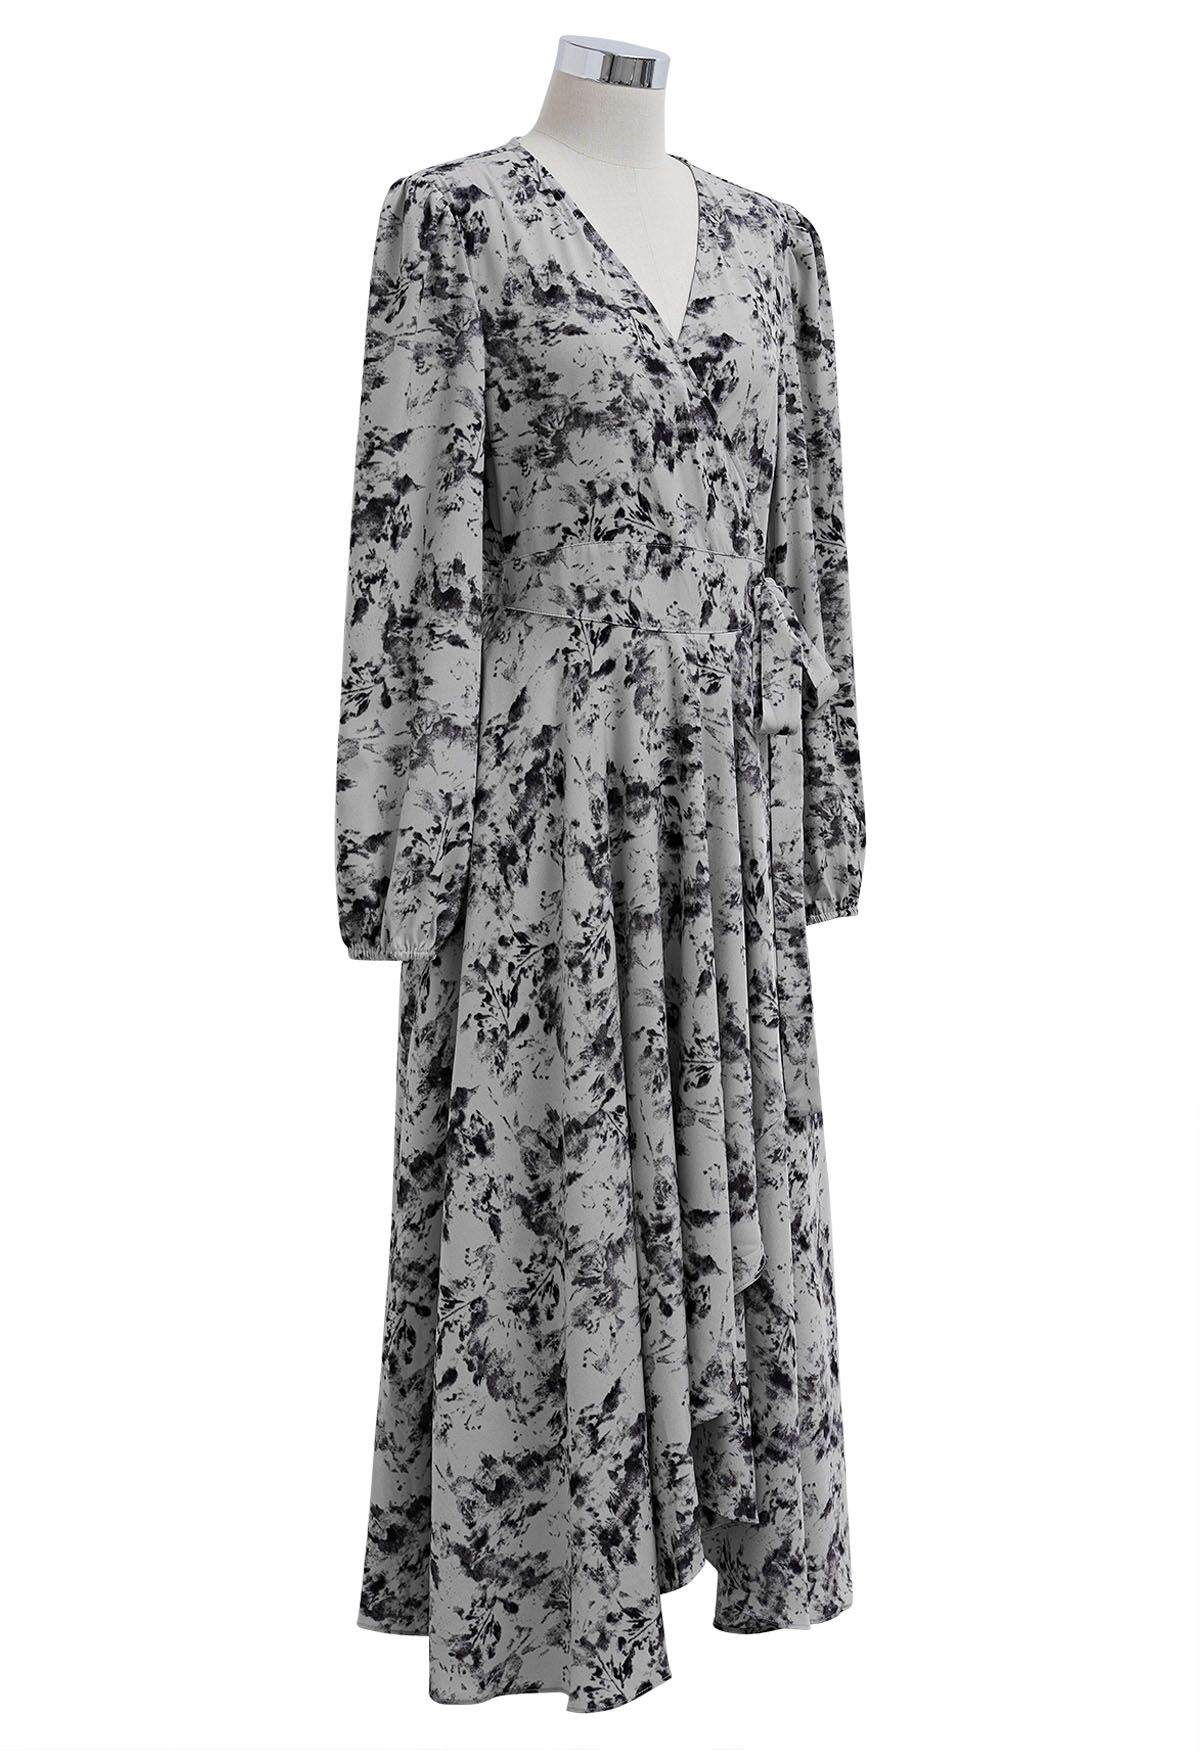 Stunning Lavender Floral Print Wrap Chiffon Maxi Dress